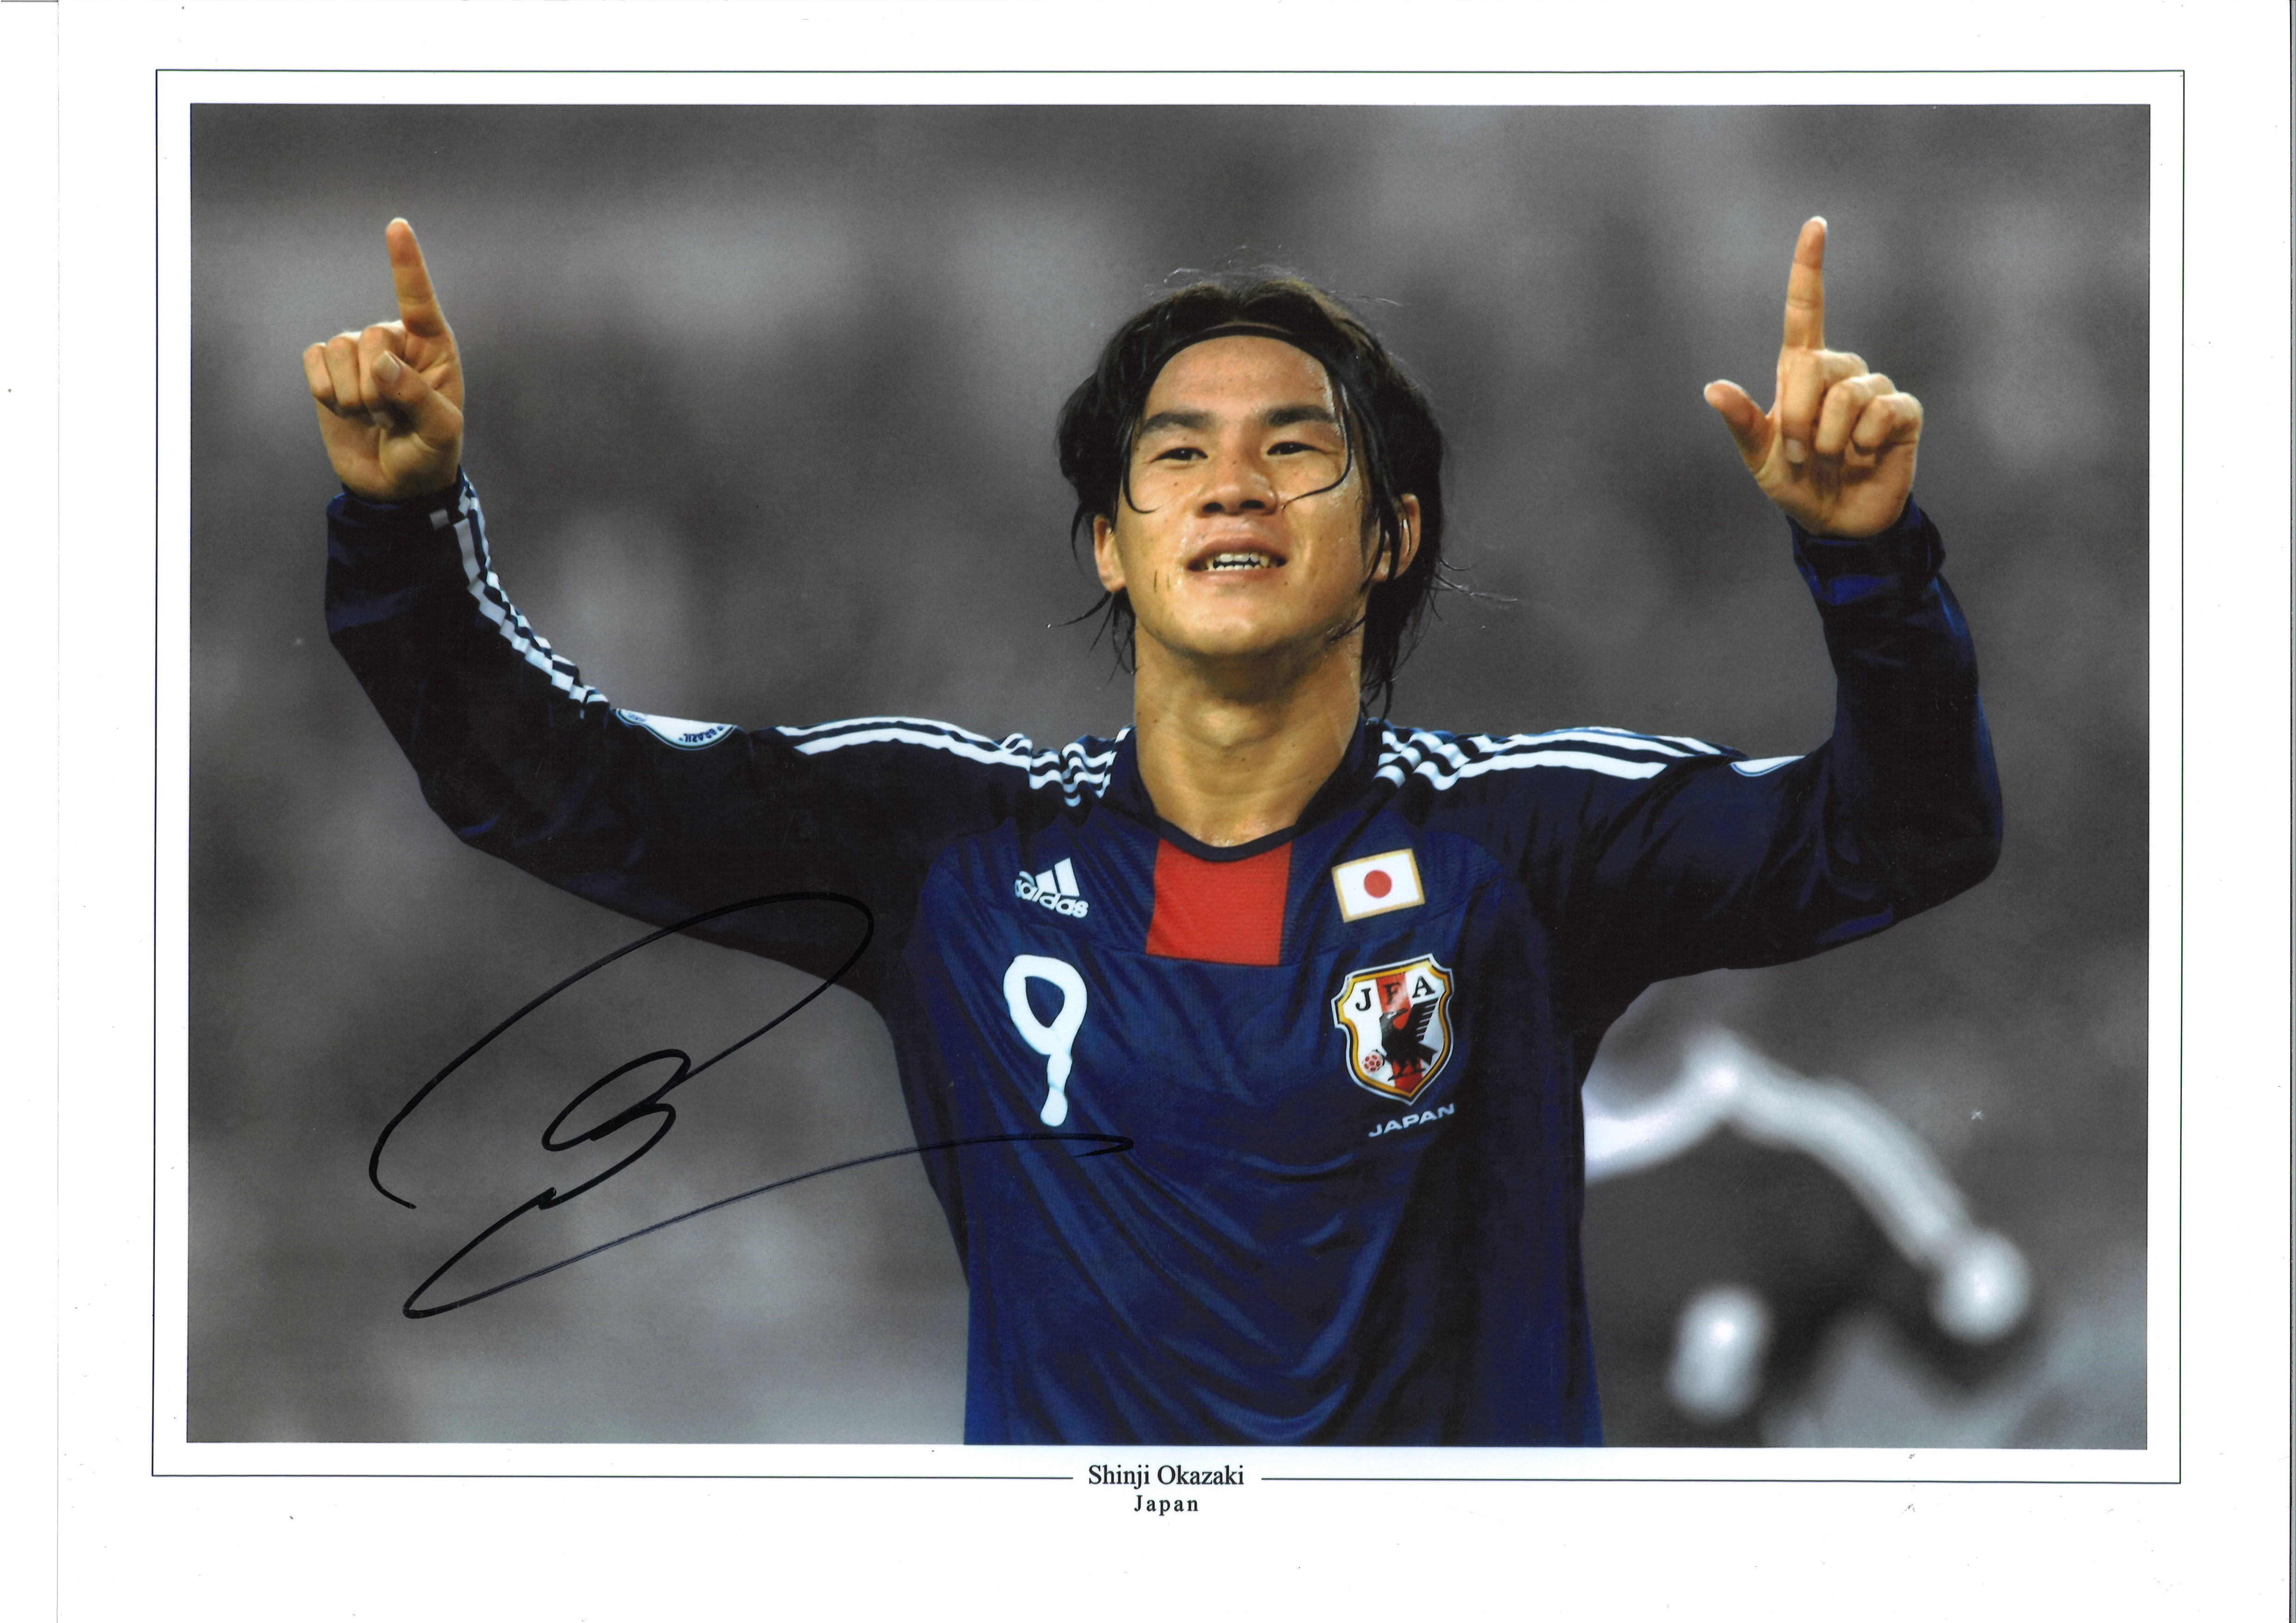 Shinji Okazaki Collage Japan Signed 16 x 12 inch football photo. Good condition. All autographs come